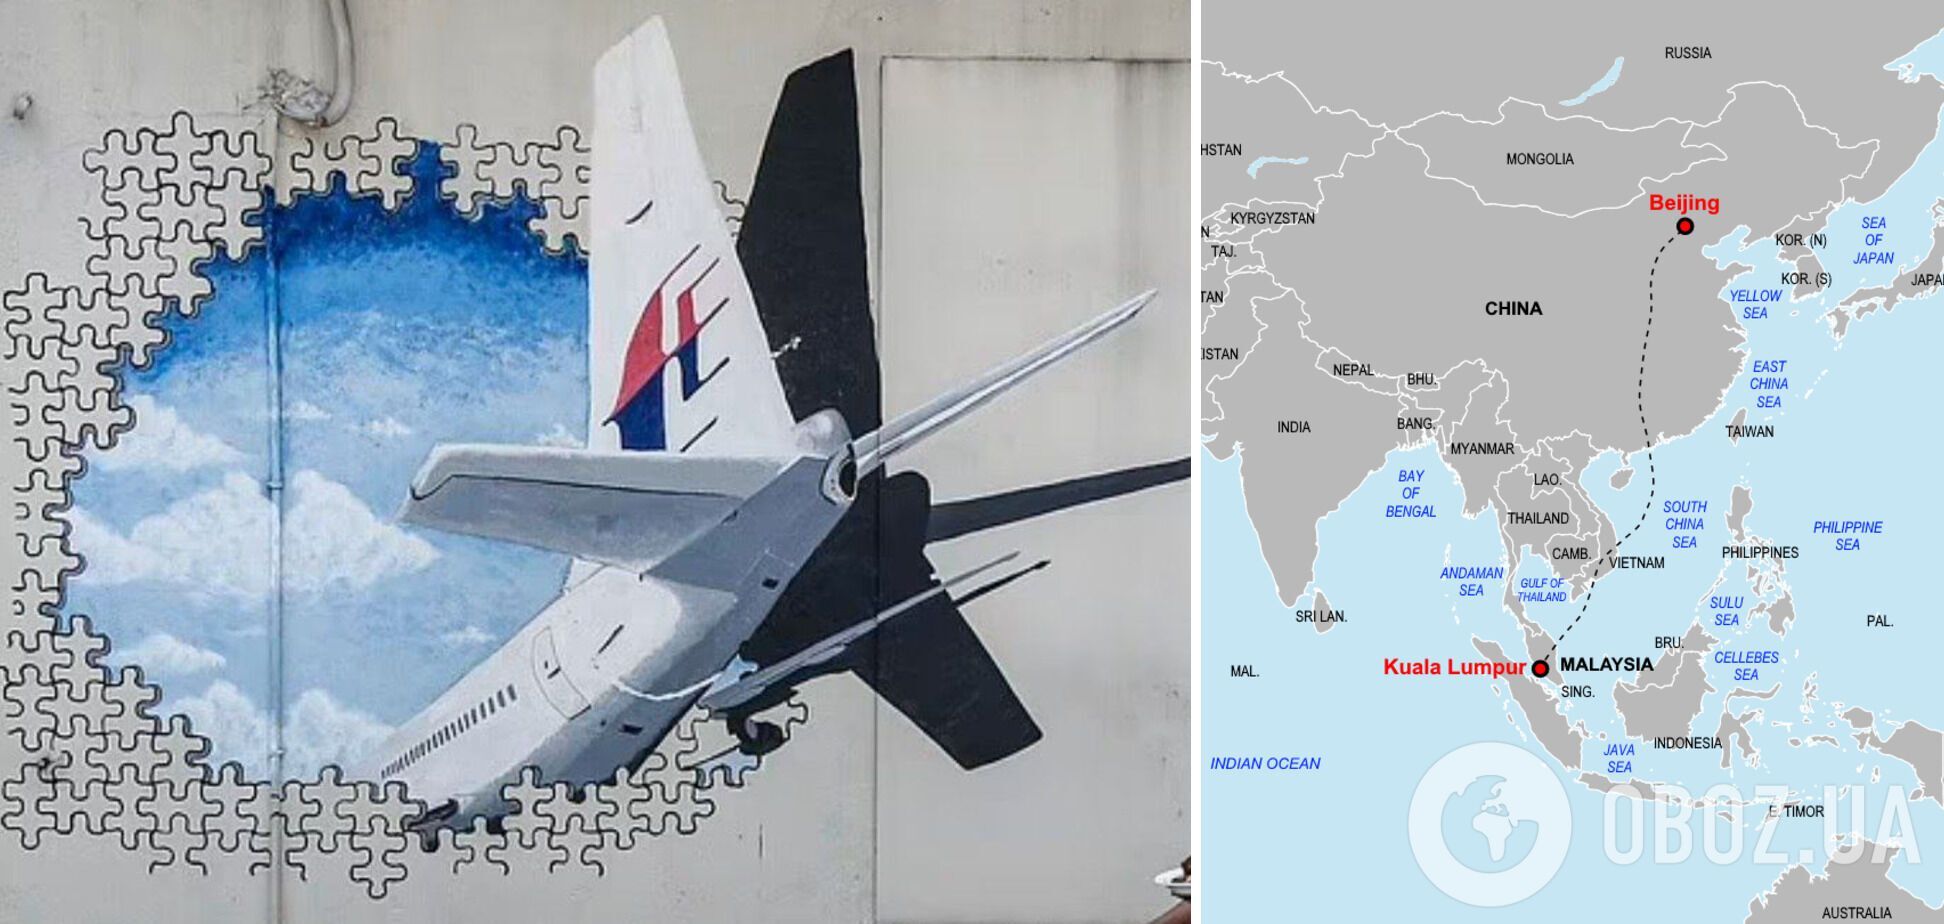 8 березня 2014 року зник літак Boeing 777-200ER рейсу MH370